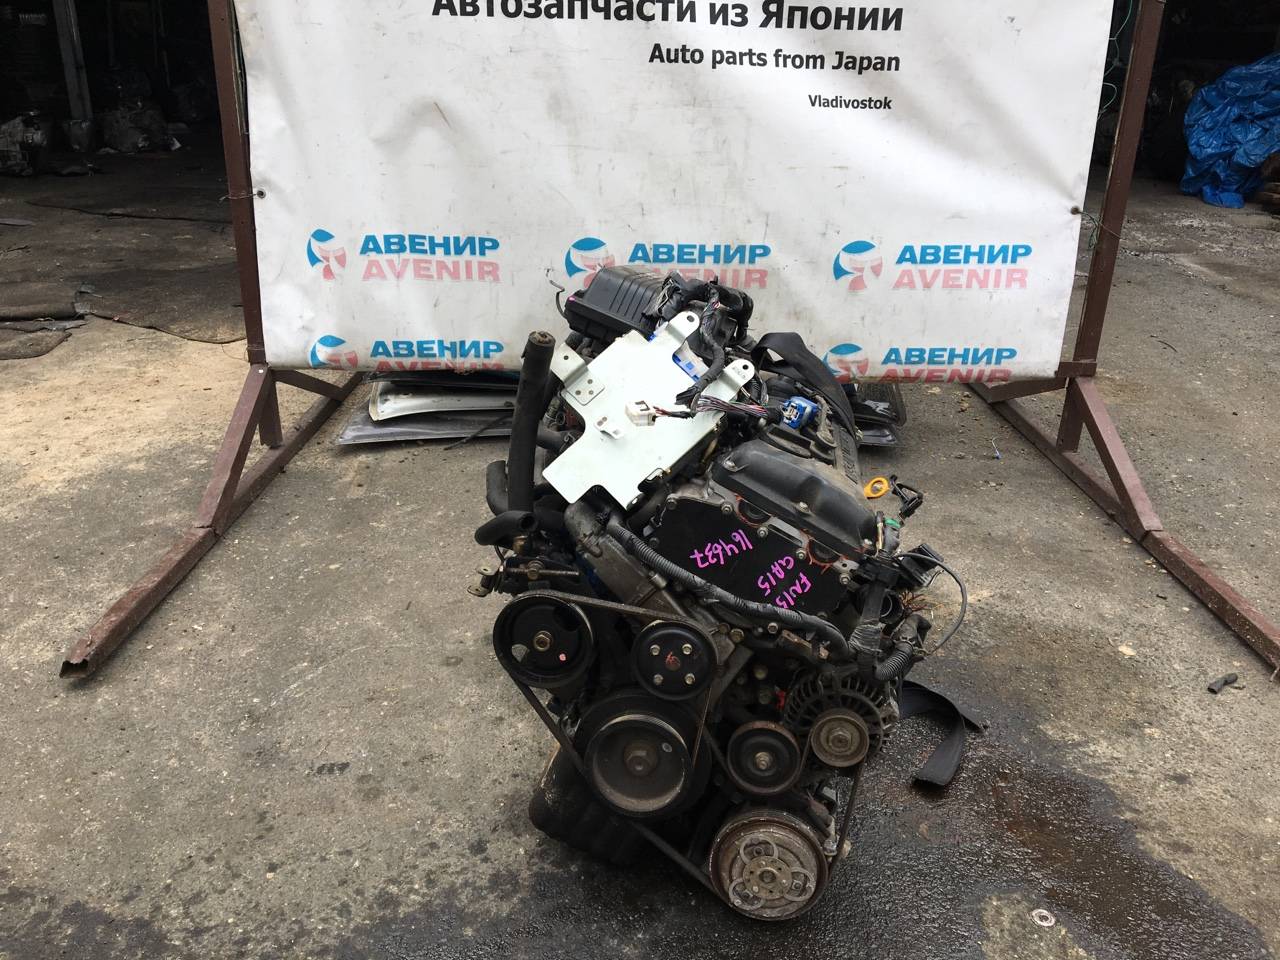 Двигатель Nissan Pulsar FN15 GA15DE